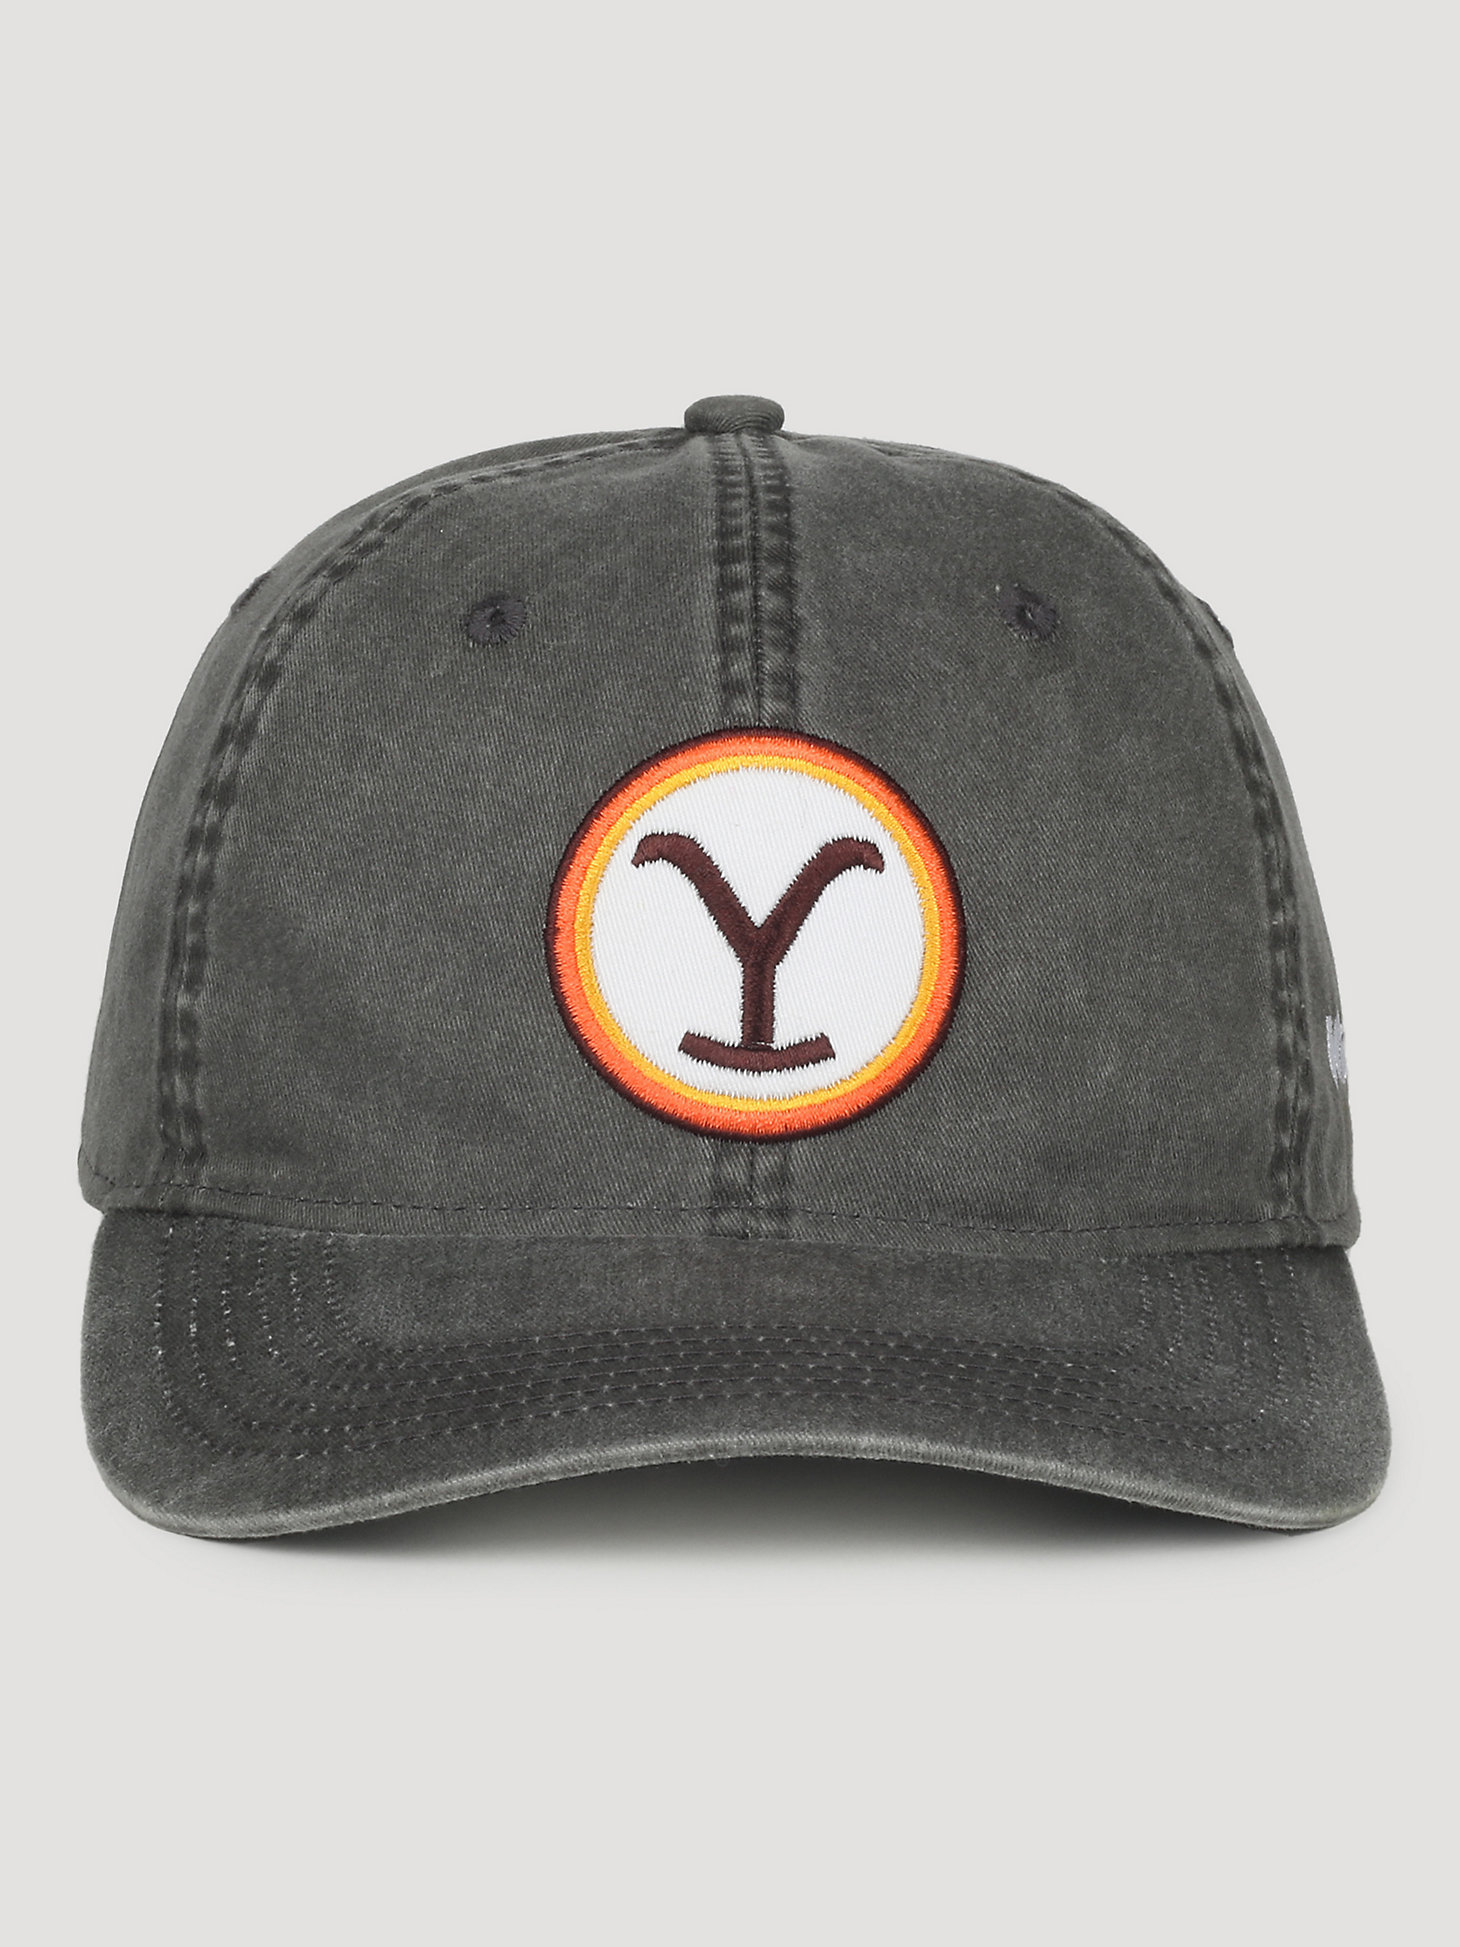 Wrangler x Yellowstone Men's Logo Cap in Black main view